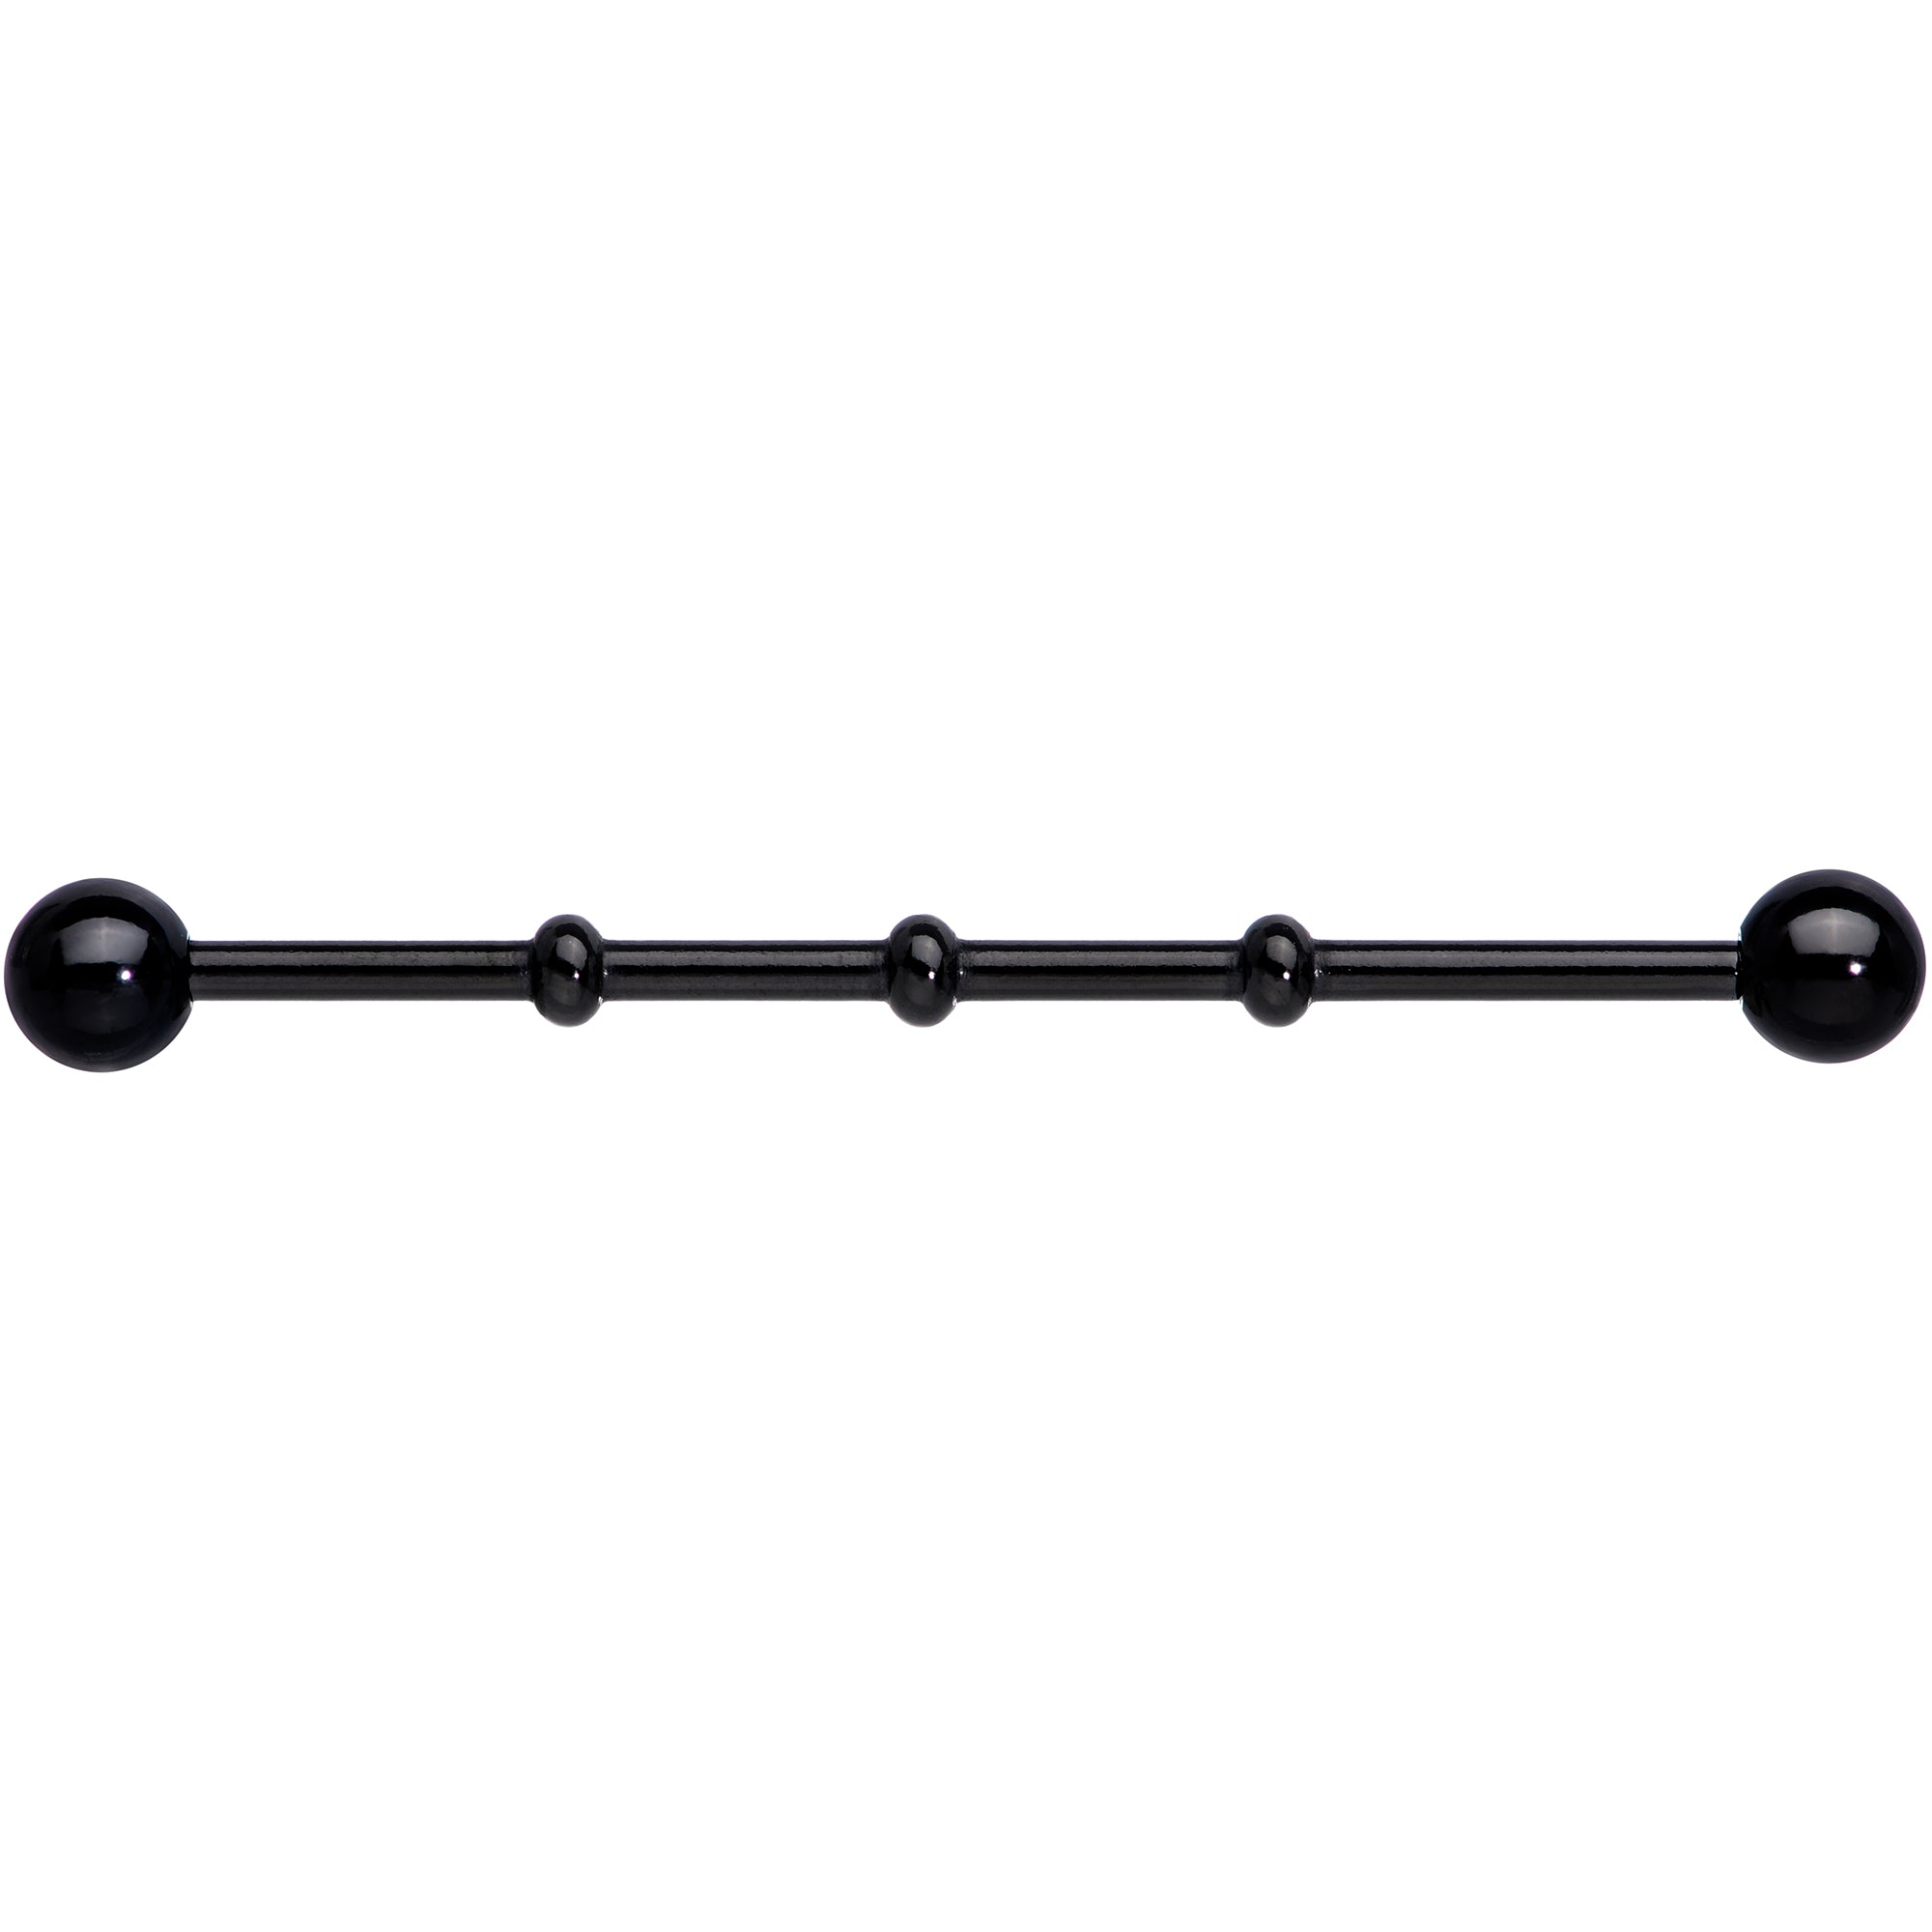 Ball Black Anodized Titanium Industrial Project Bar 38mm